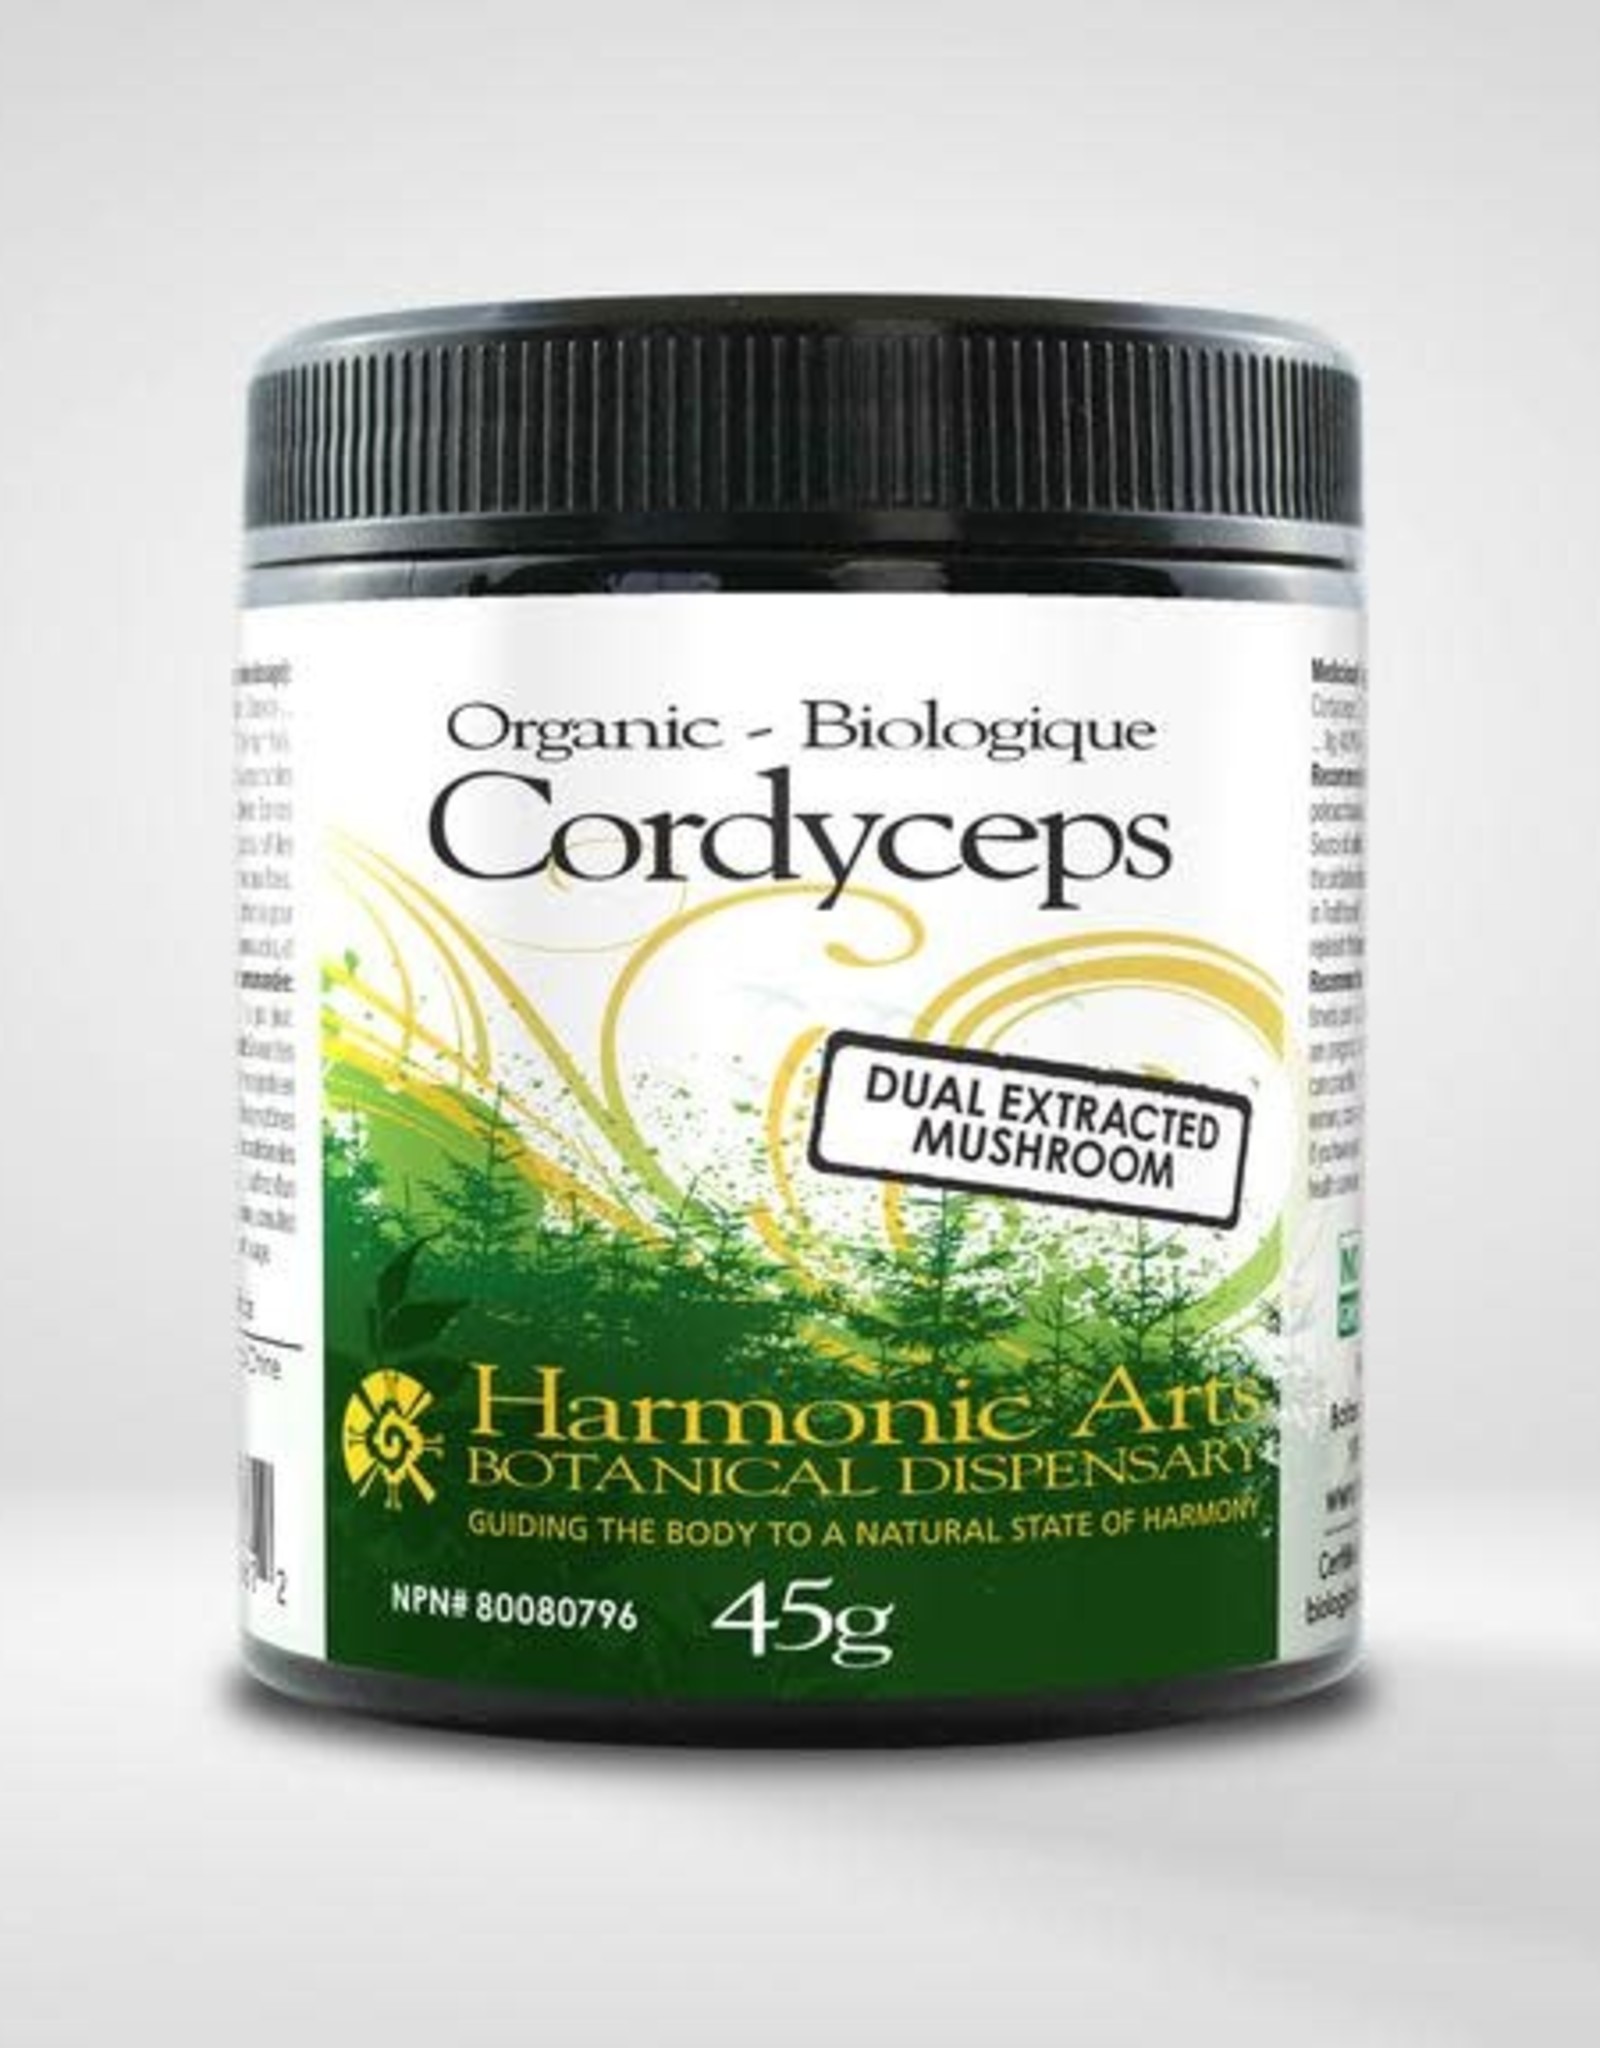 Harmonic Arts Cordyceps Dual Extract Powder